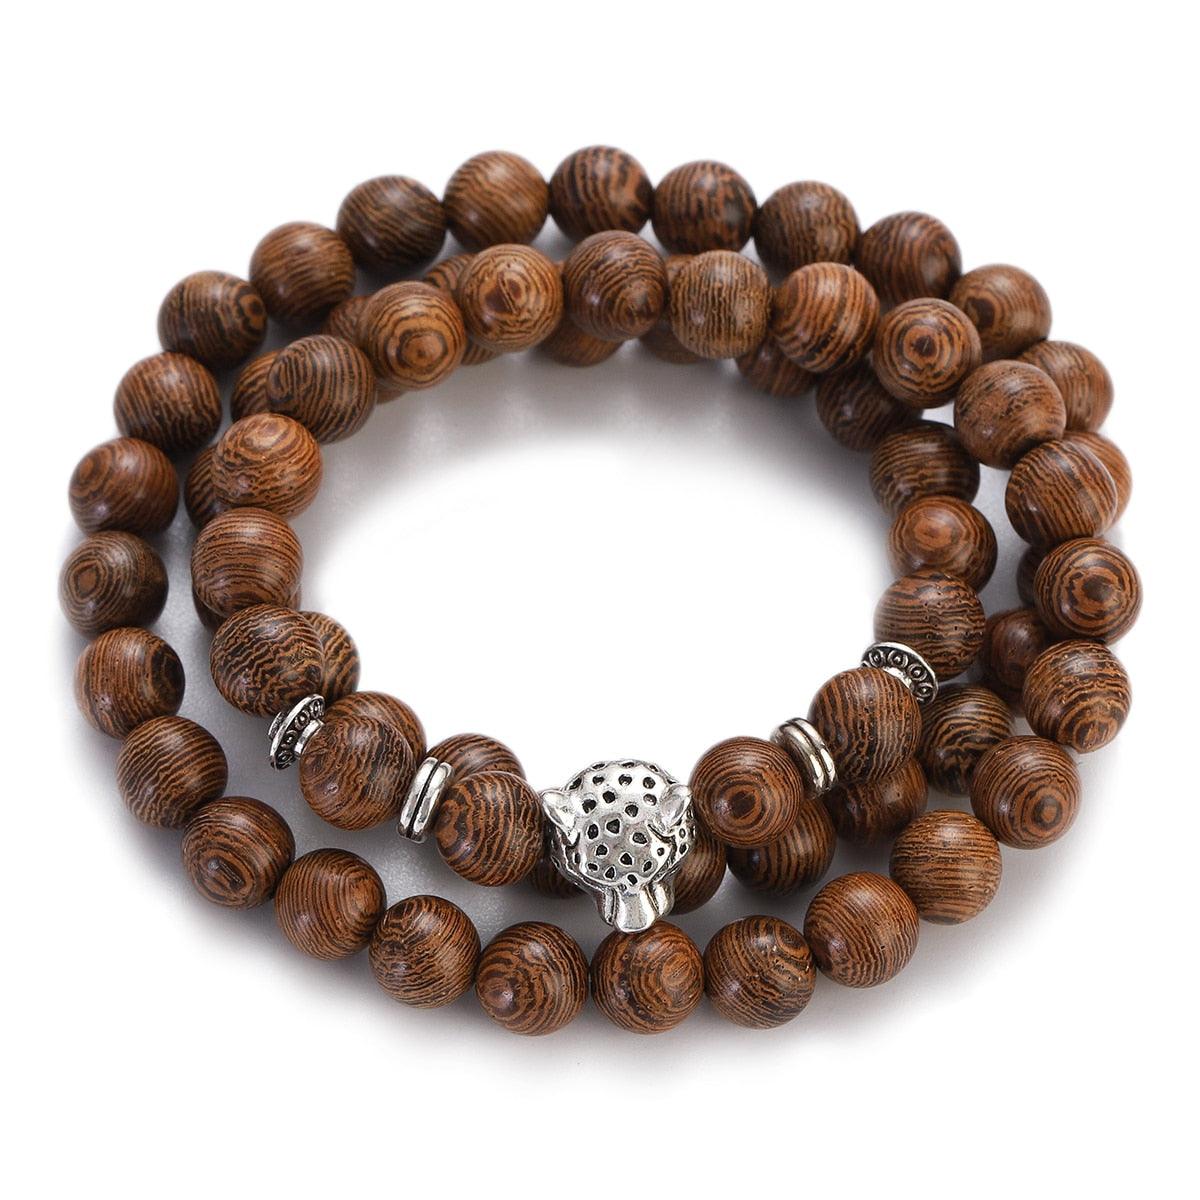 Boho Buddha Bead Bracelet Bracelets - The Burner Shop